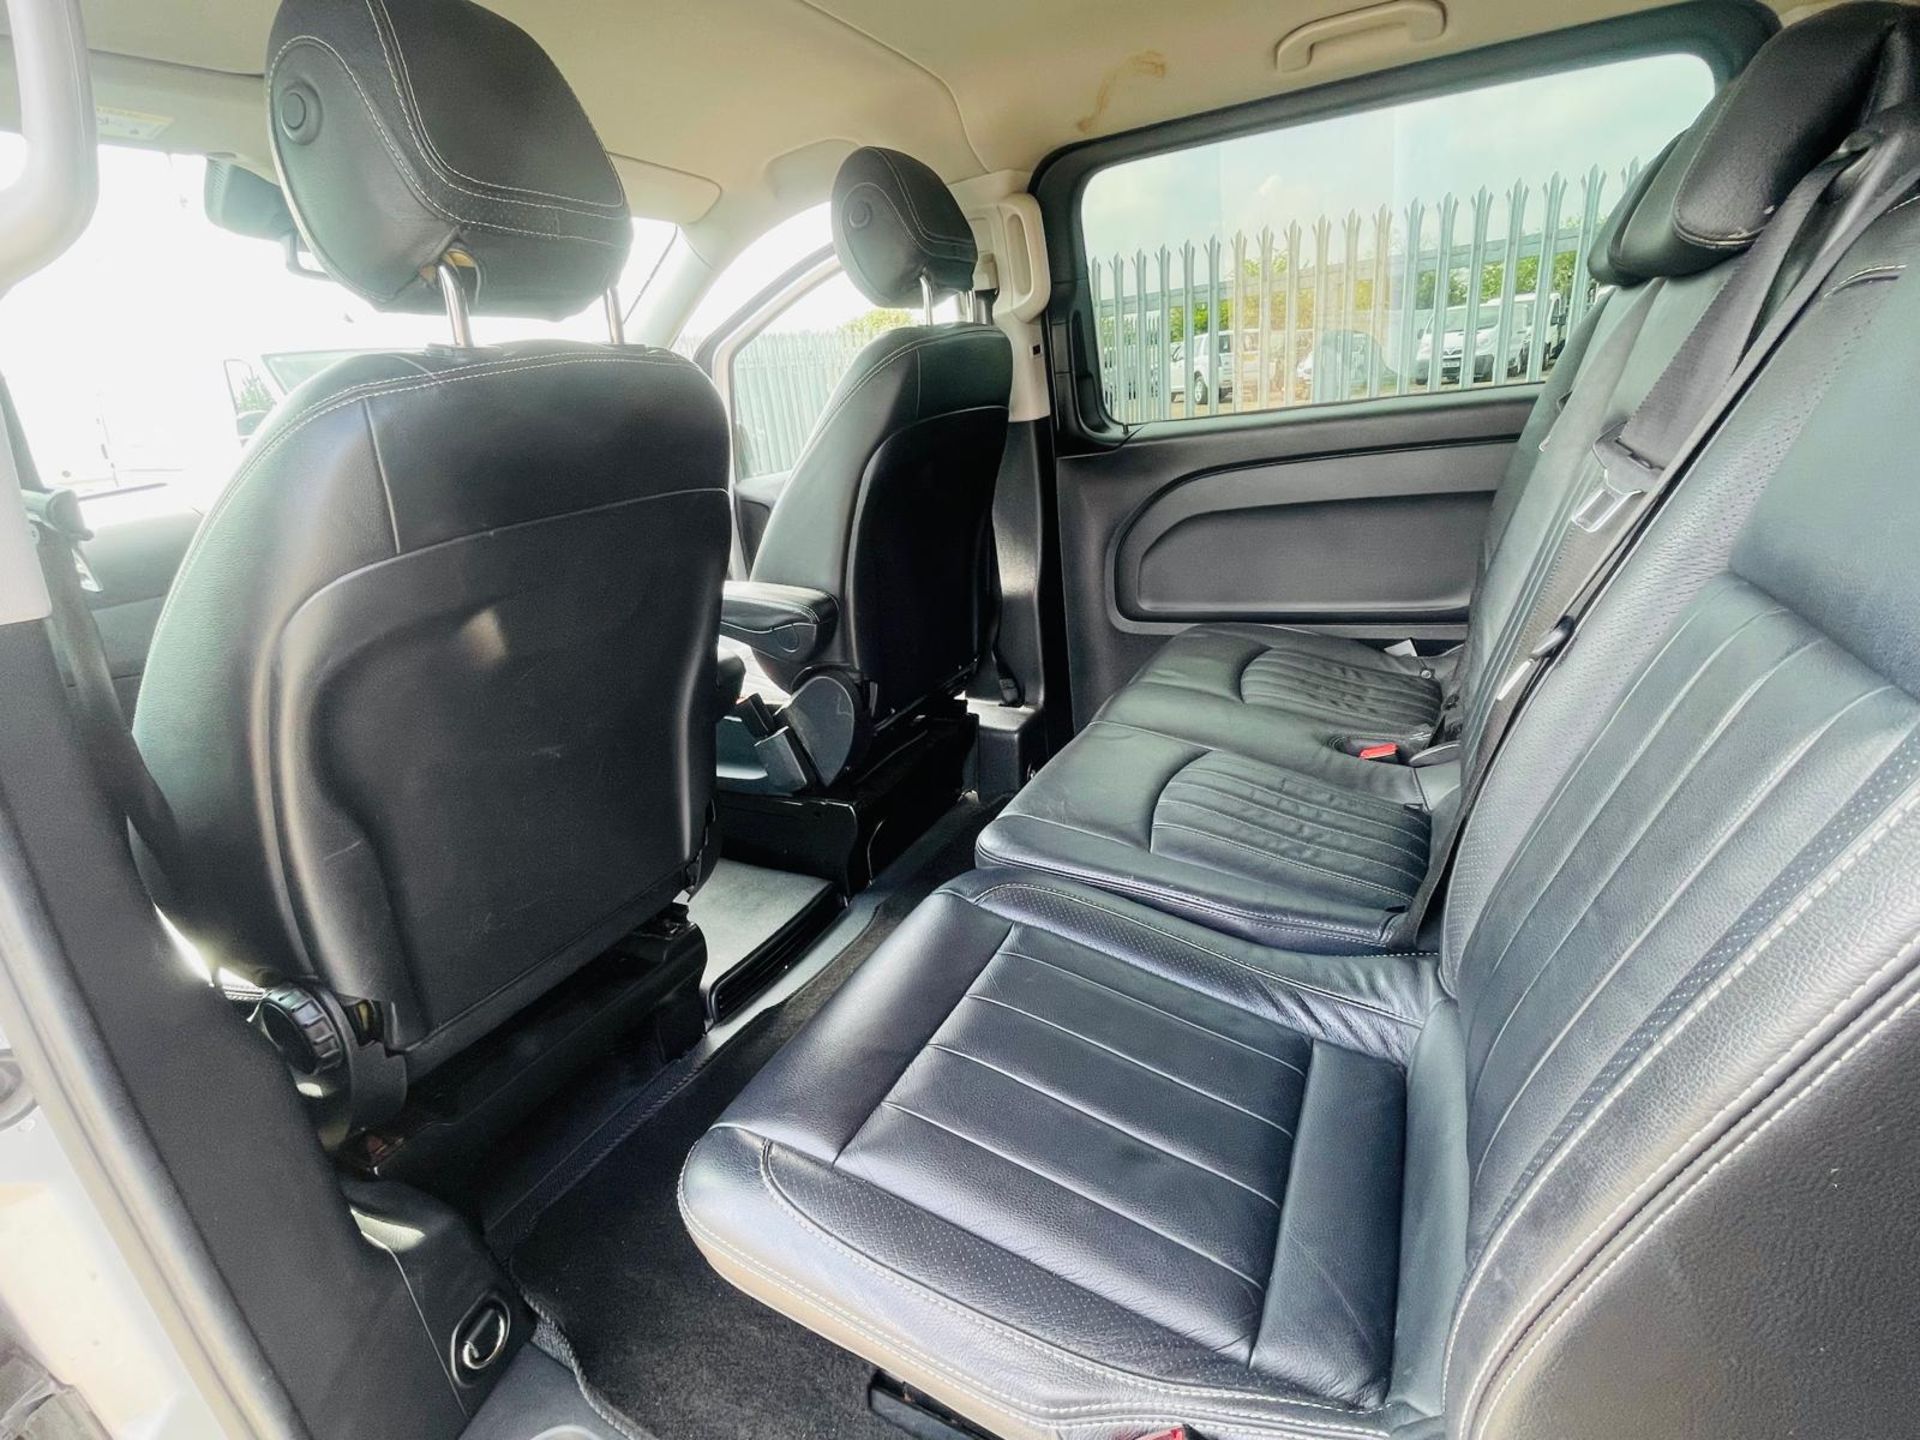 Mercedes-Benz Vito Premium 2.1 119 CDI 7G Tronic Crew Cab LWB Automatic 2019'19 Reg'- Alloy Wheels - Image 26 of 31